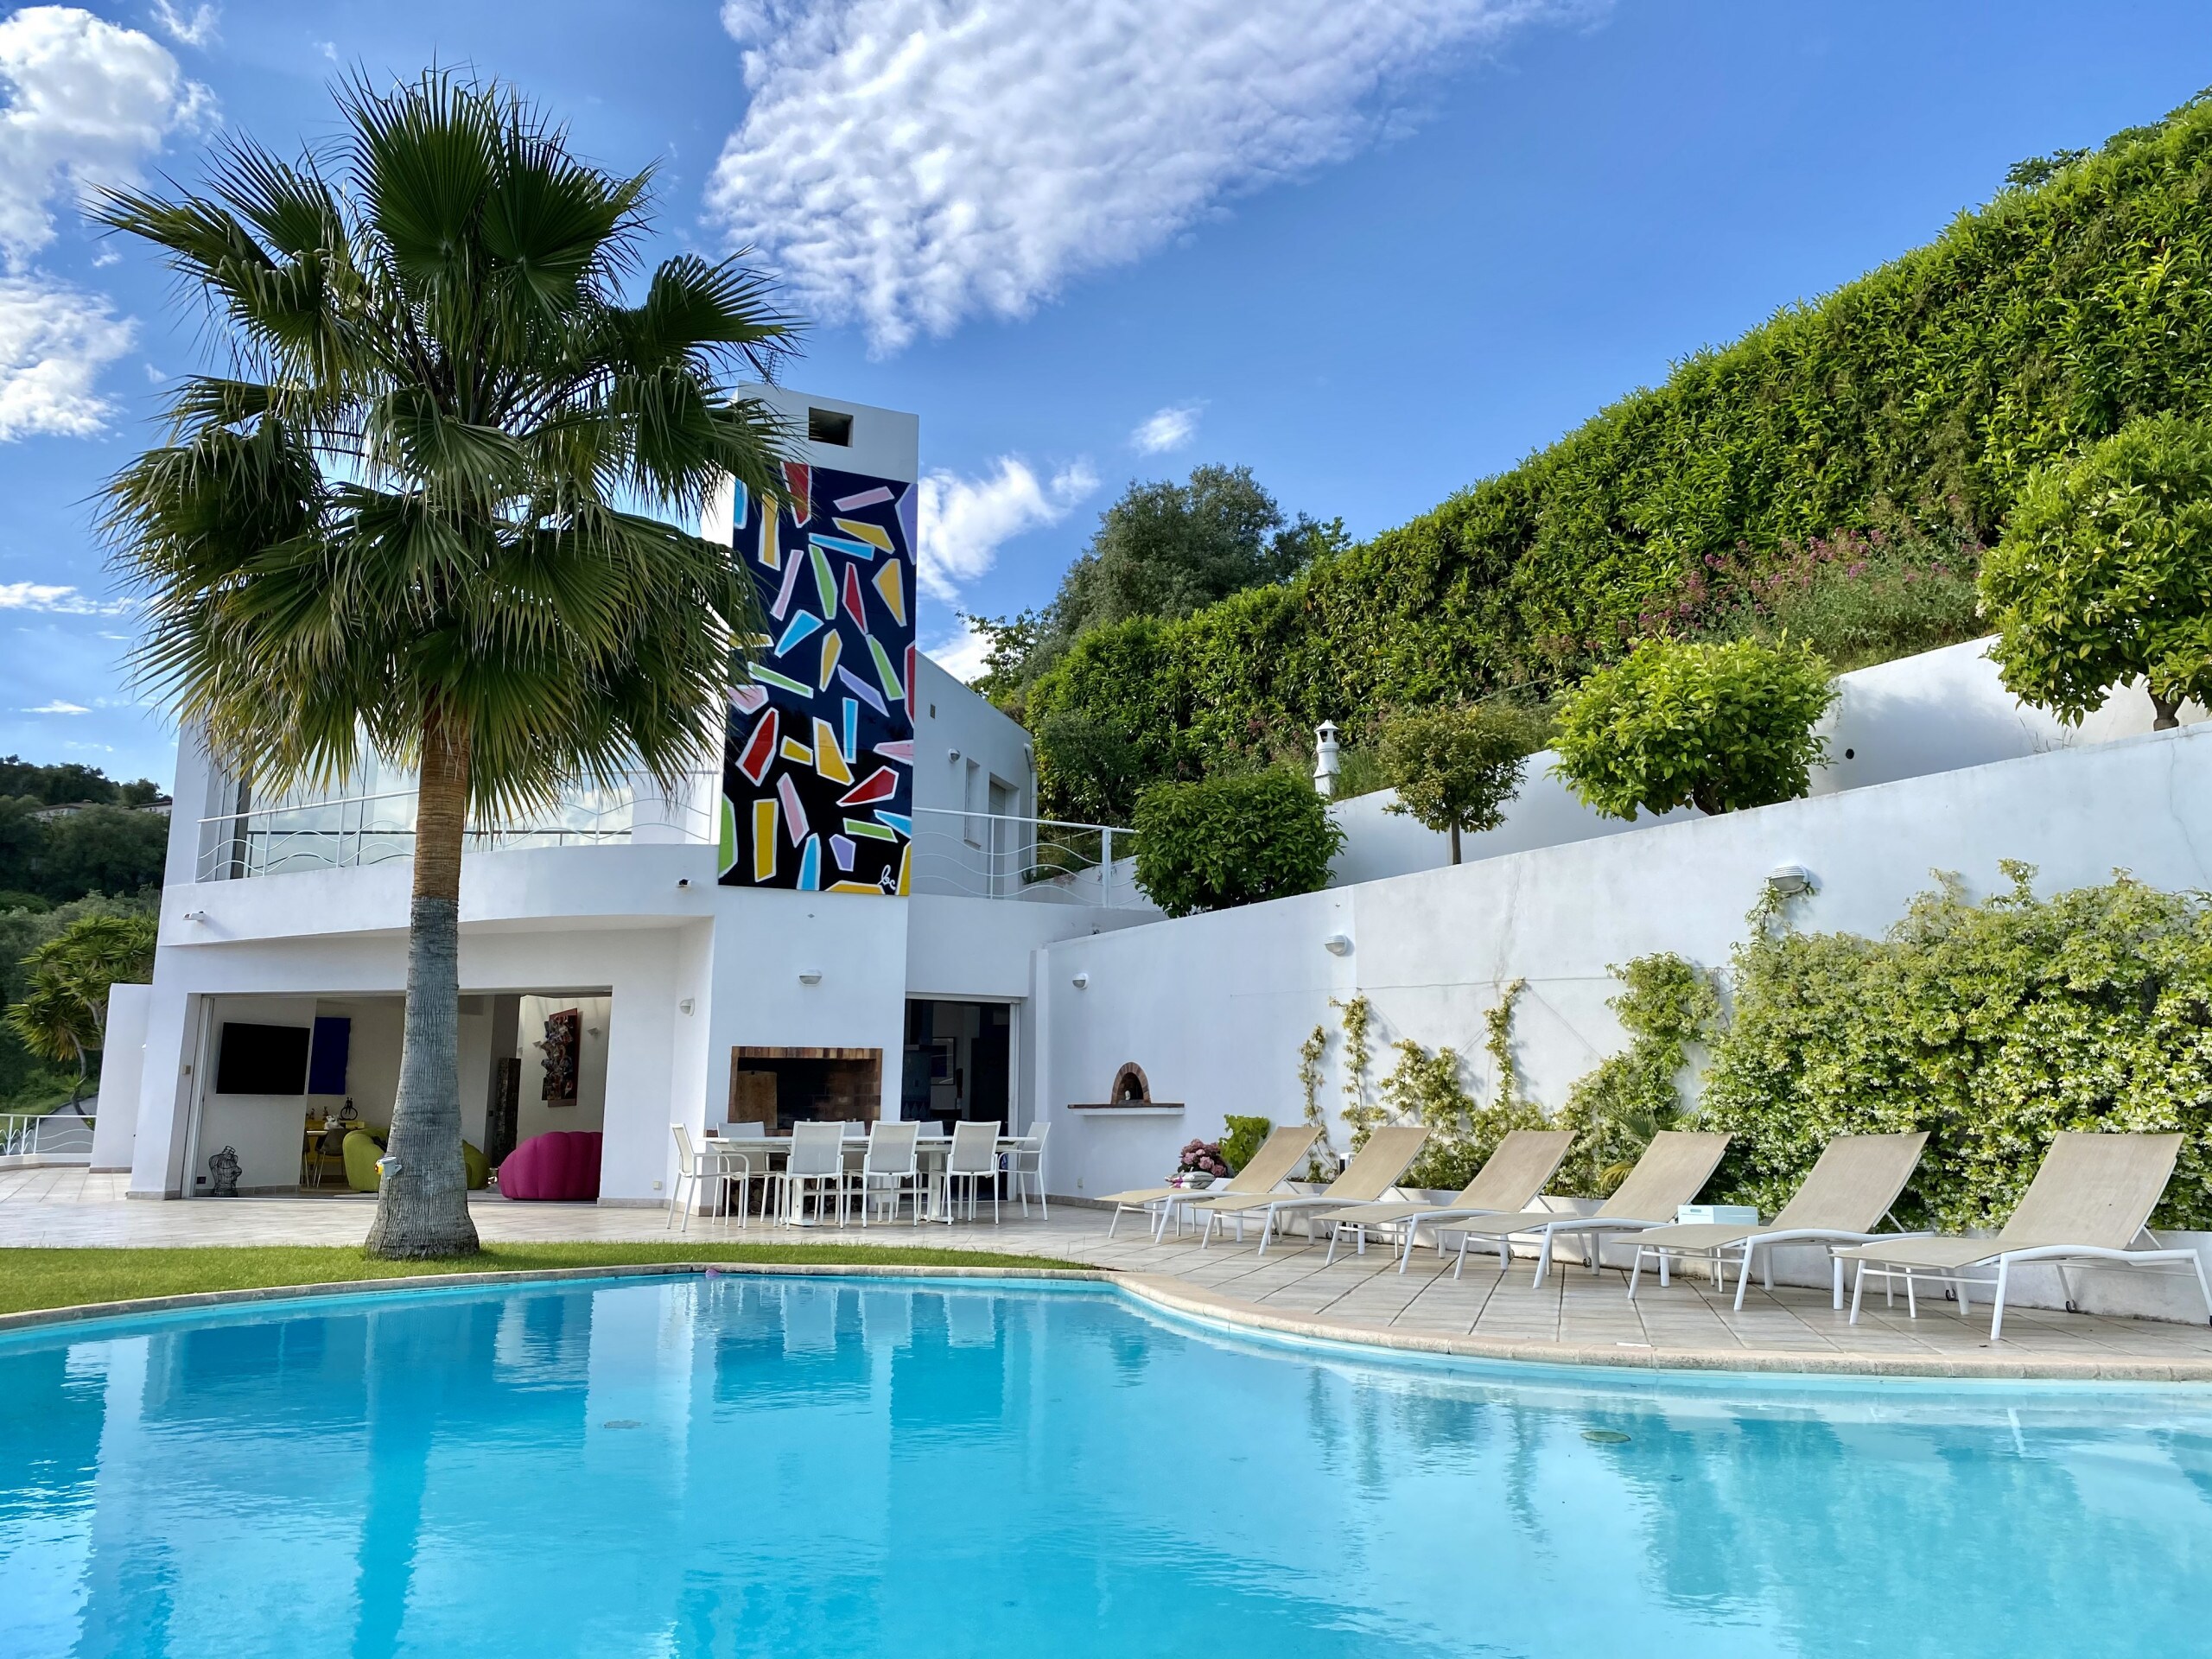 Modern villa in Nice with swimming pool